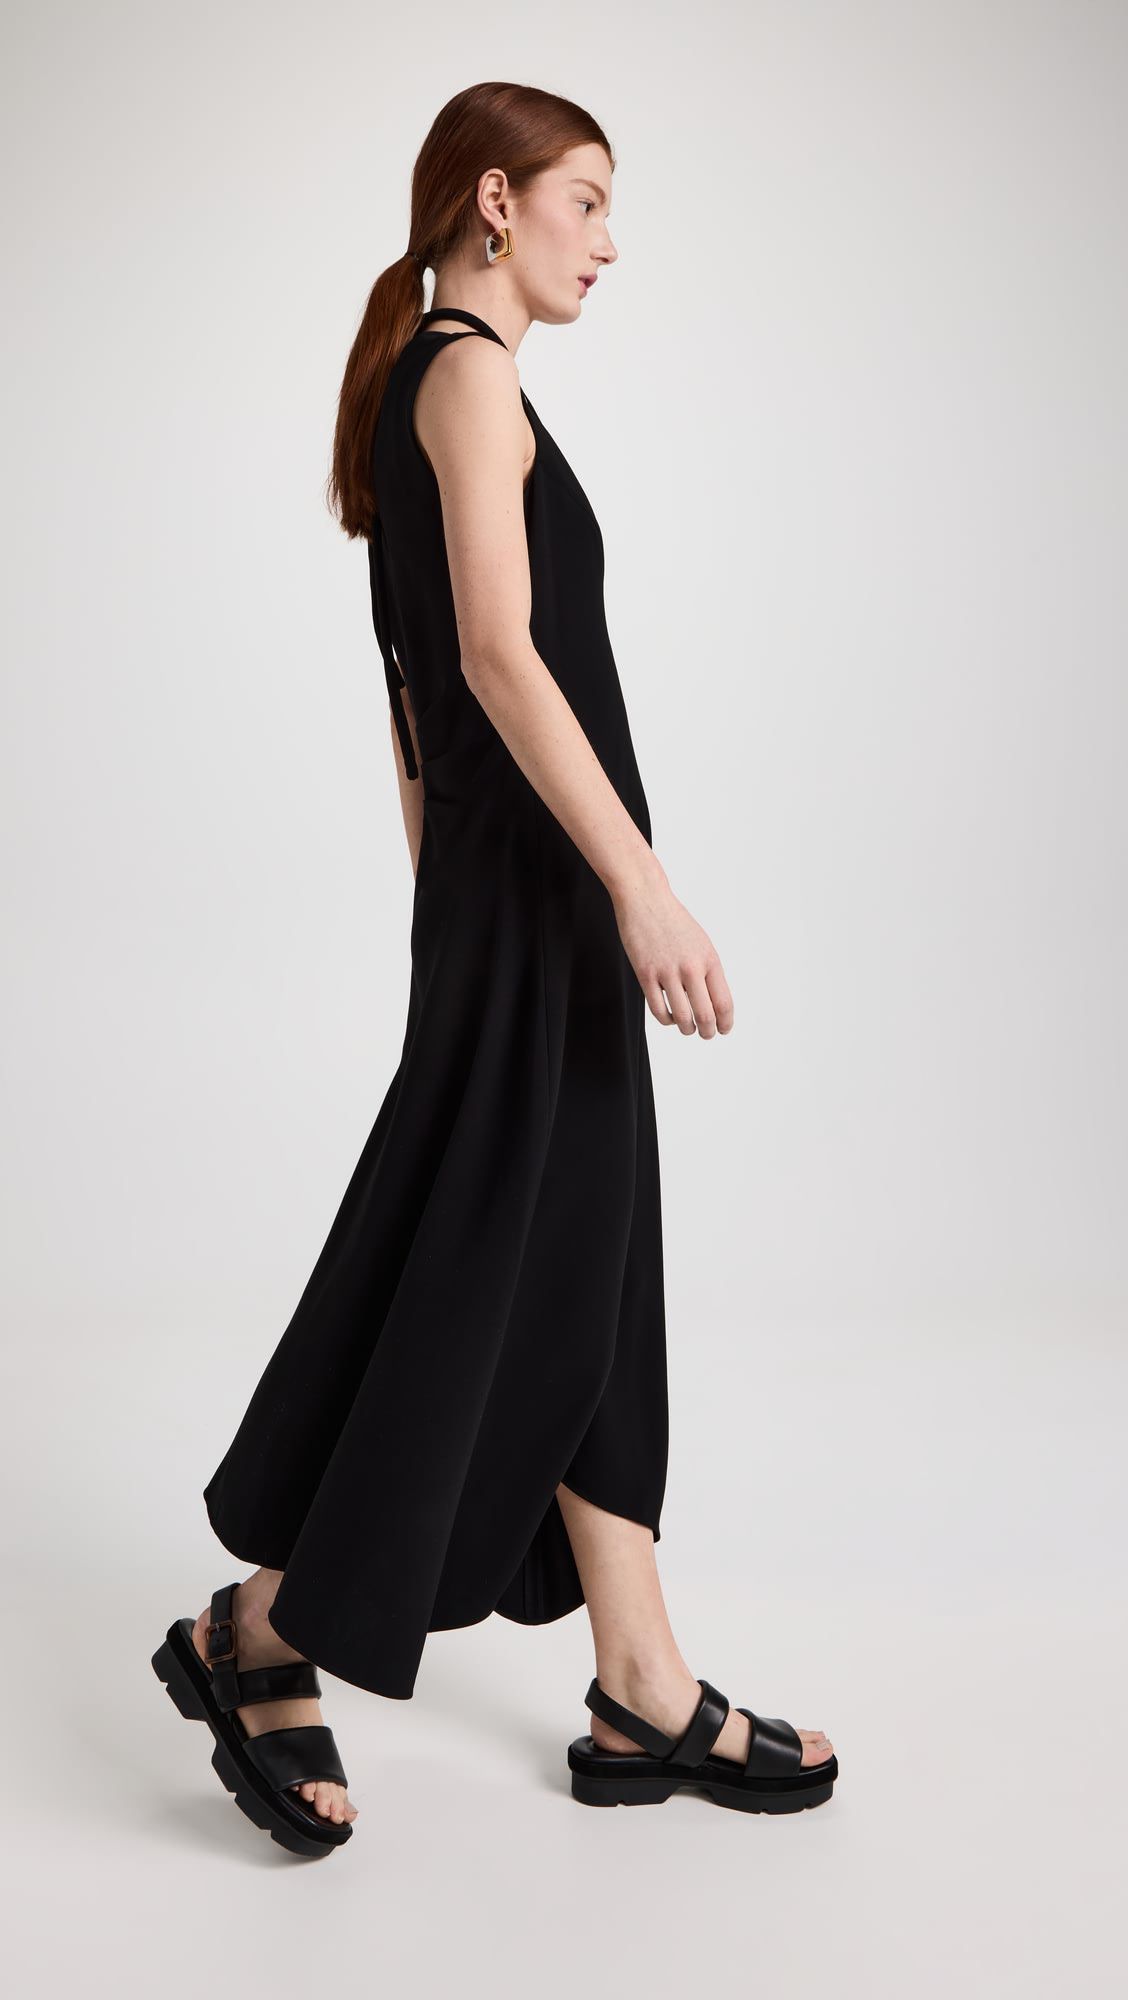 OEM Sleeveless cutout black slimming waist dress